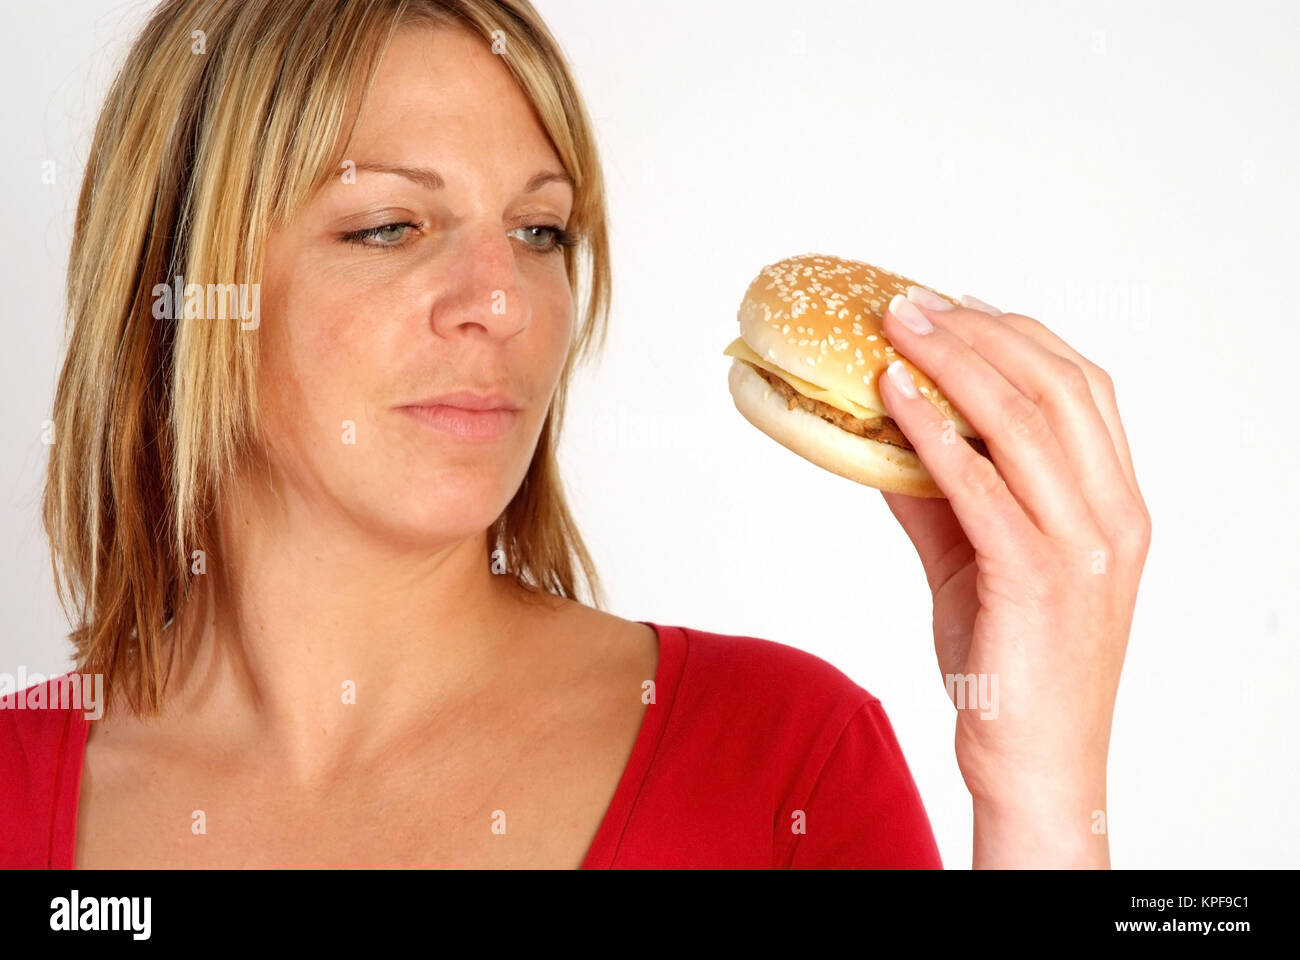 Junge Frau mit Cheeseburger - woman with cheeseburger Stock Photo